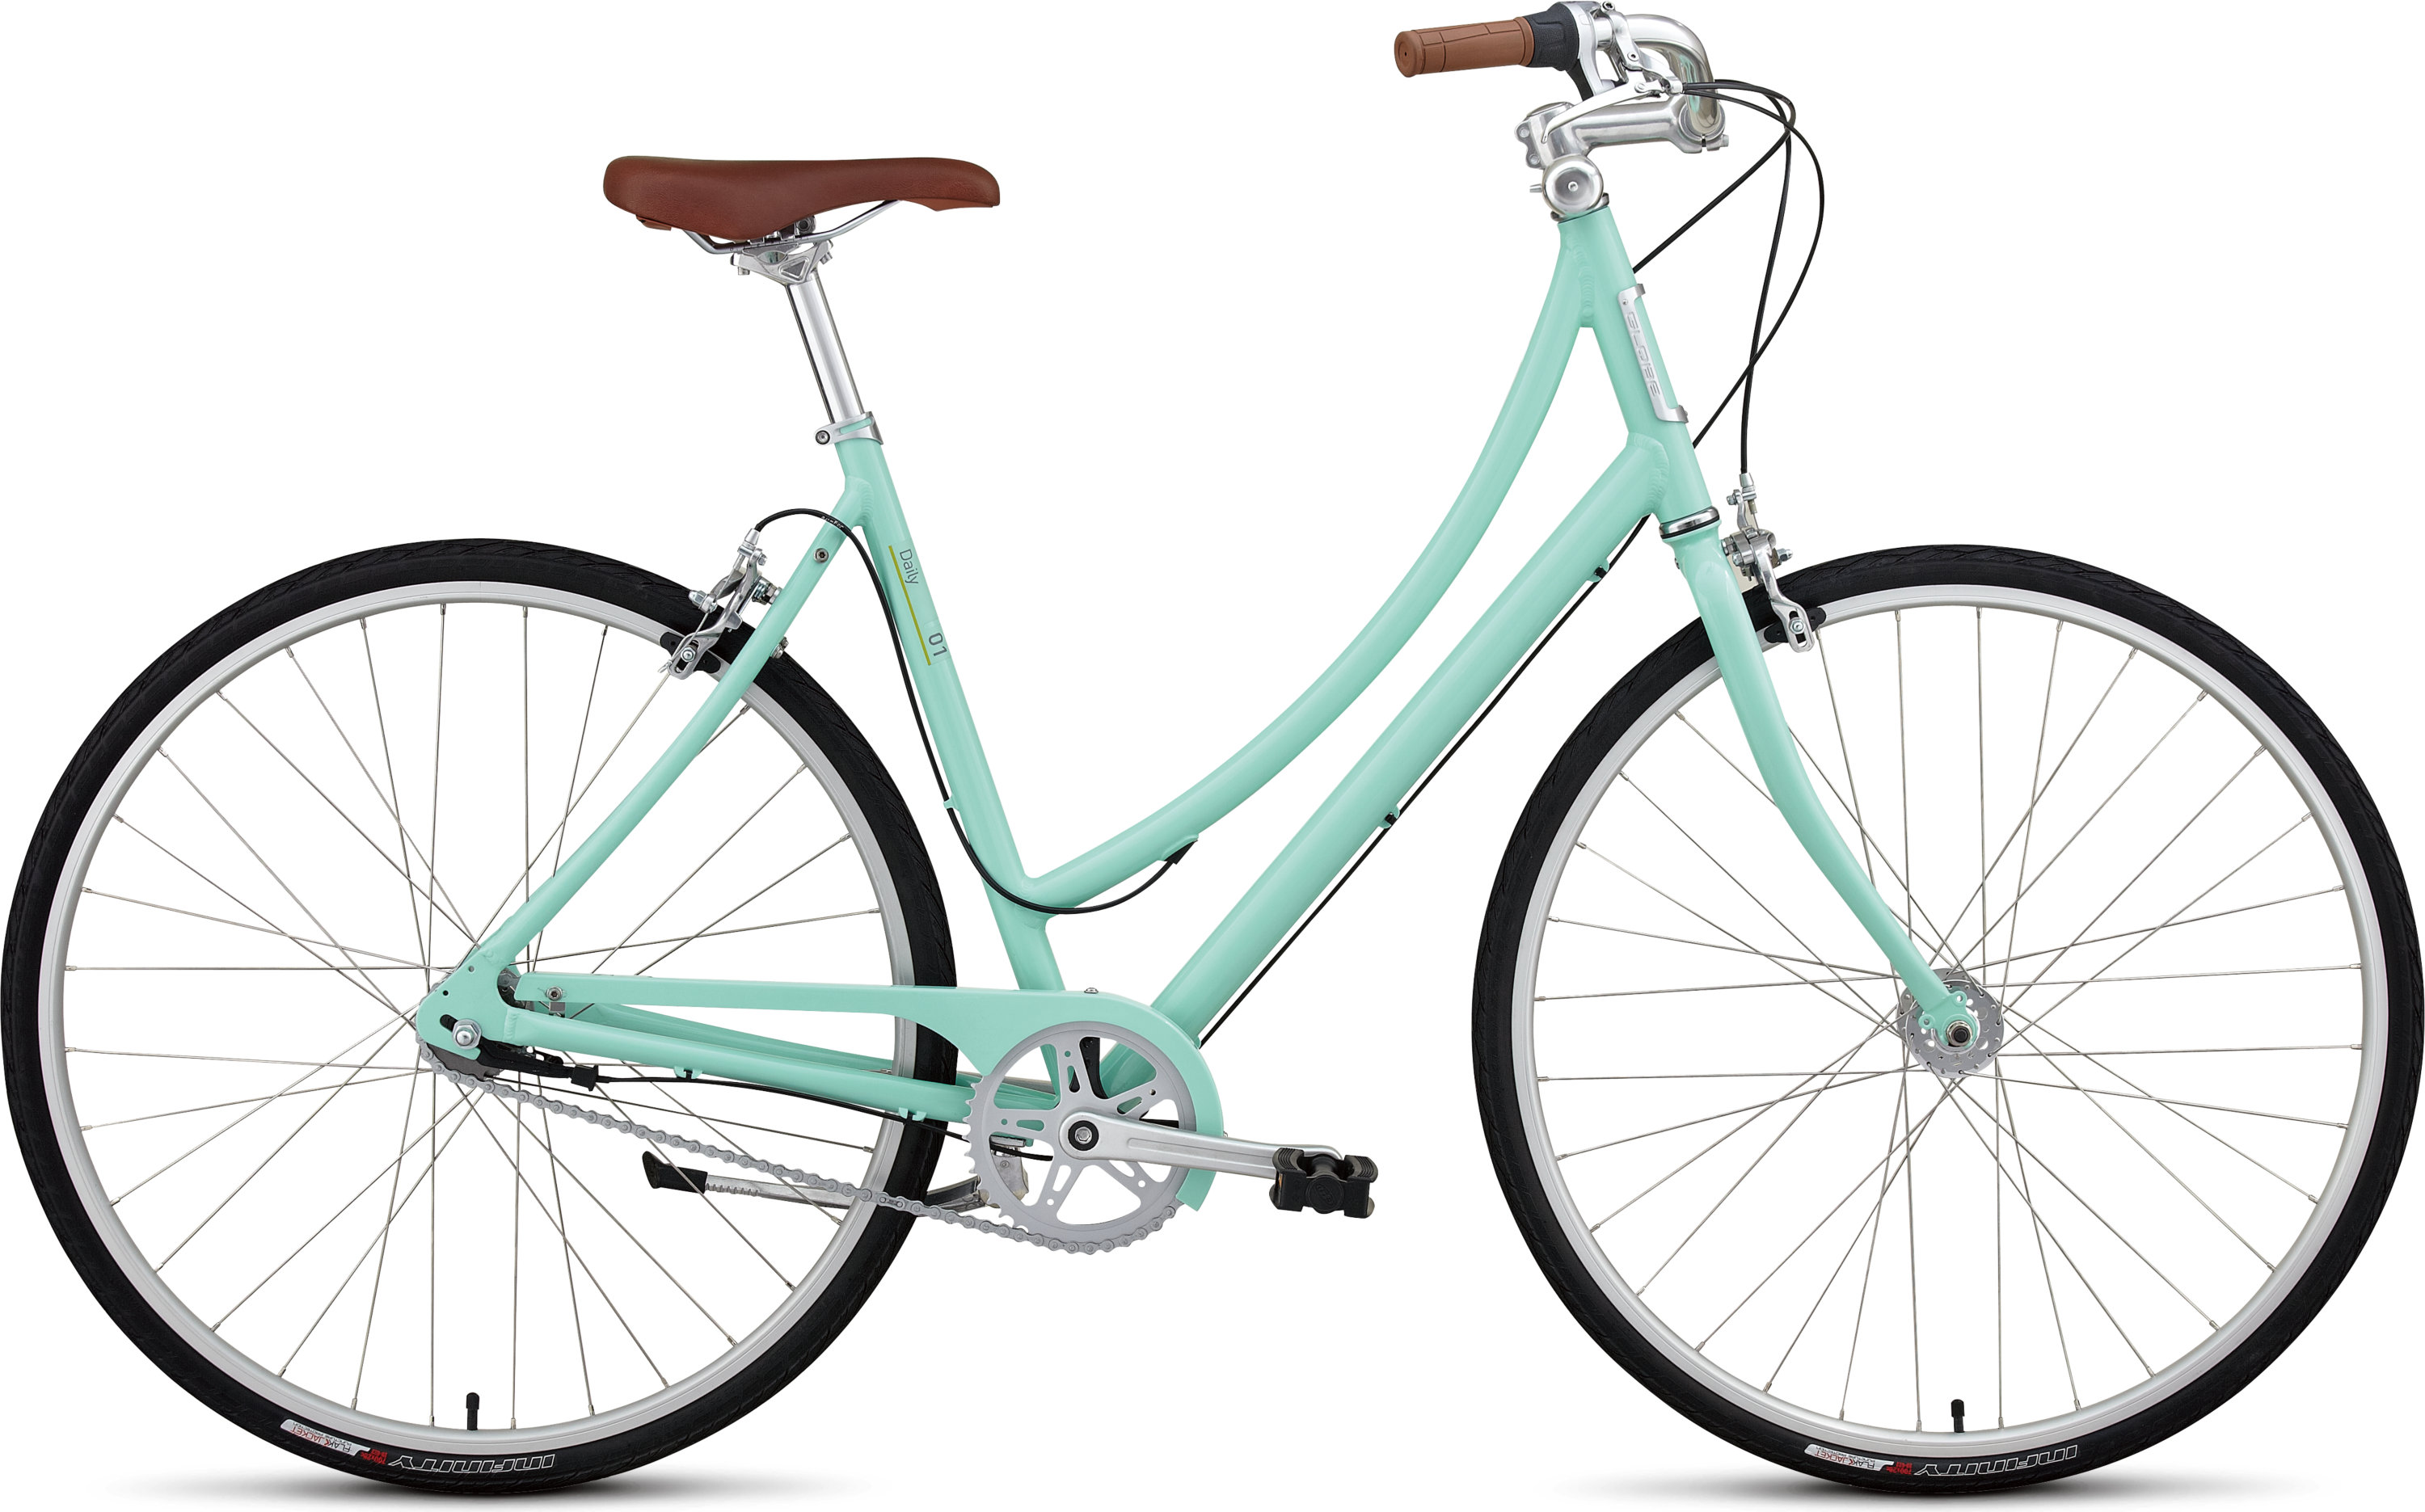 everysingle.bike | Bikes like the 2014 Specialized Daily 2 Step